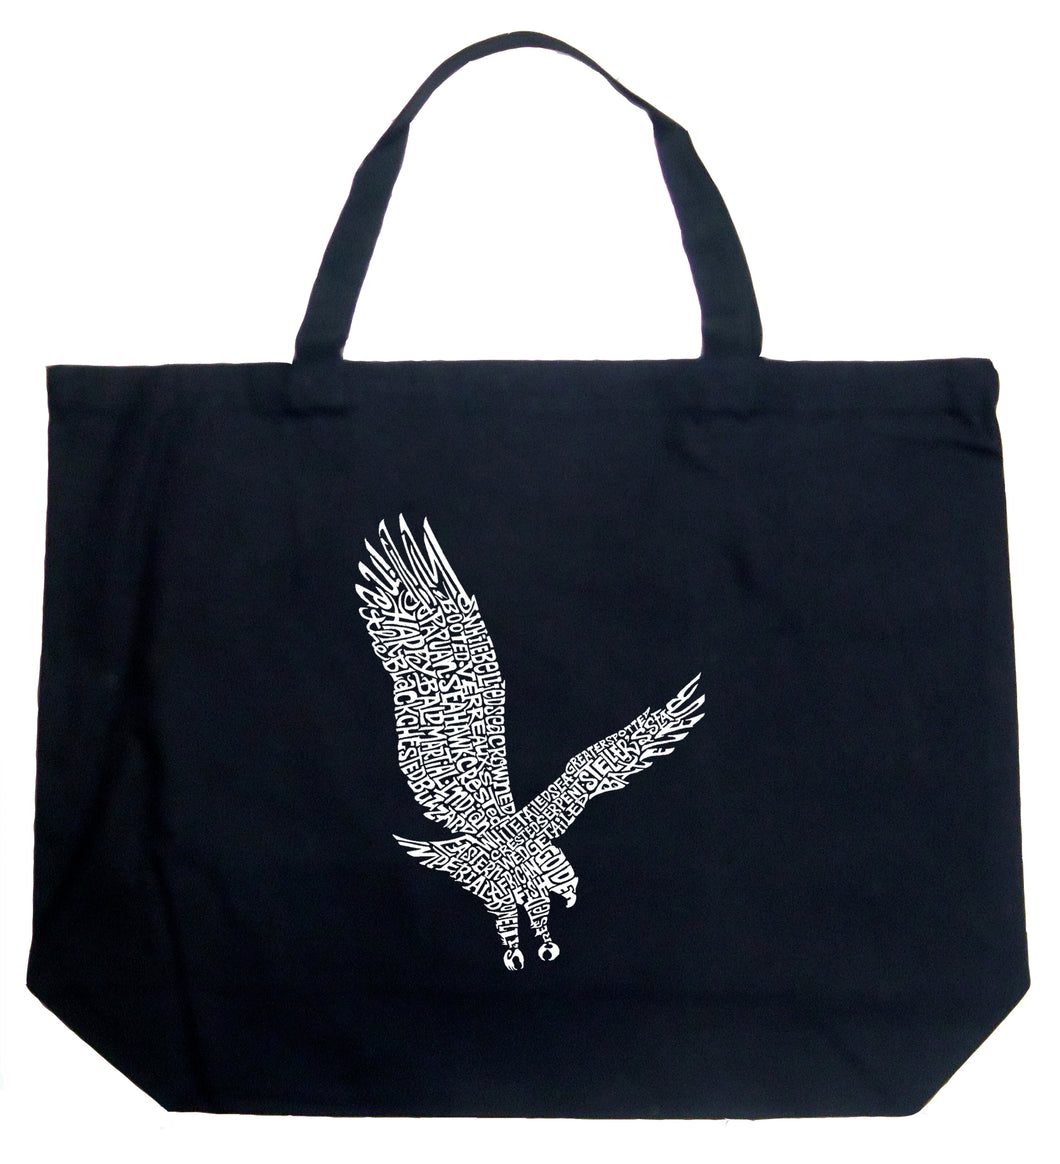 Eagle - Large Word Art Tote Bag